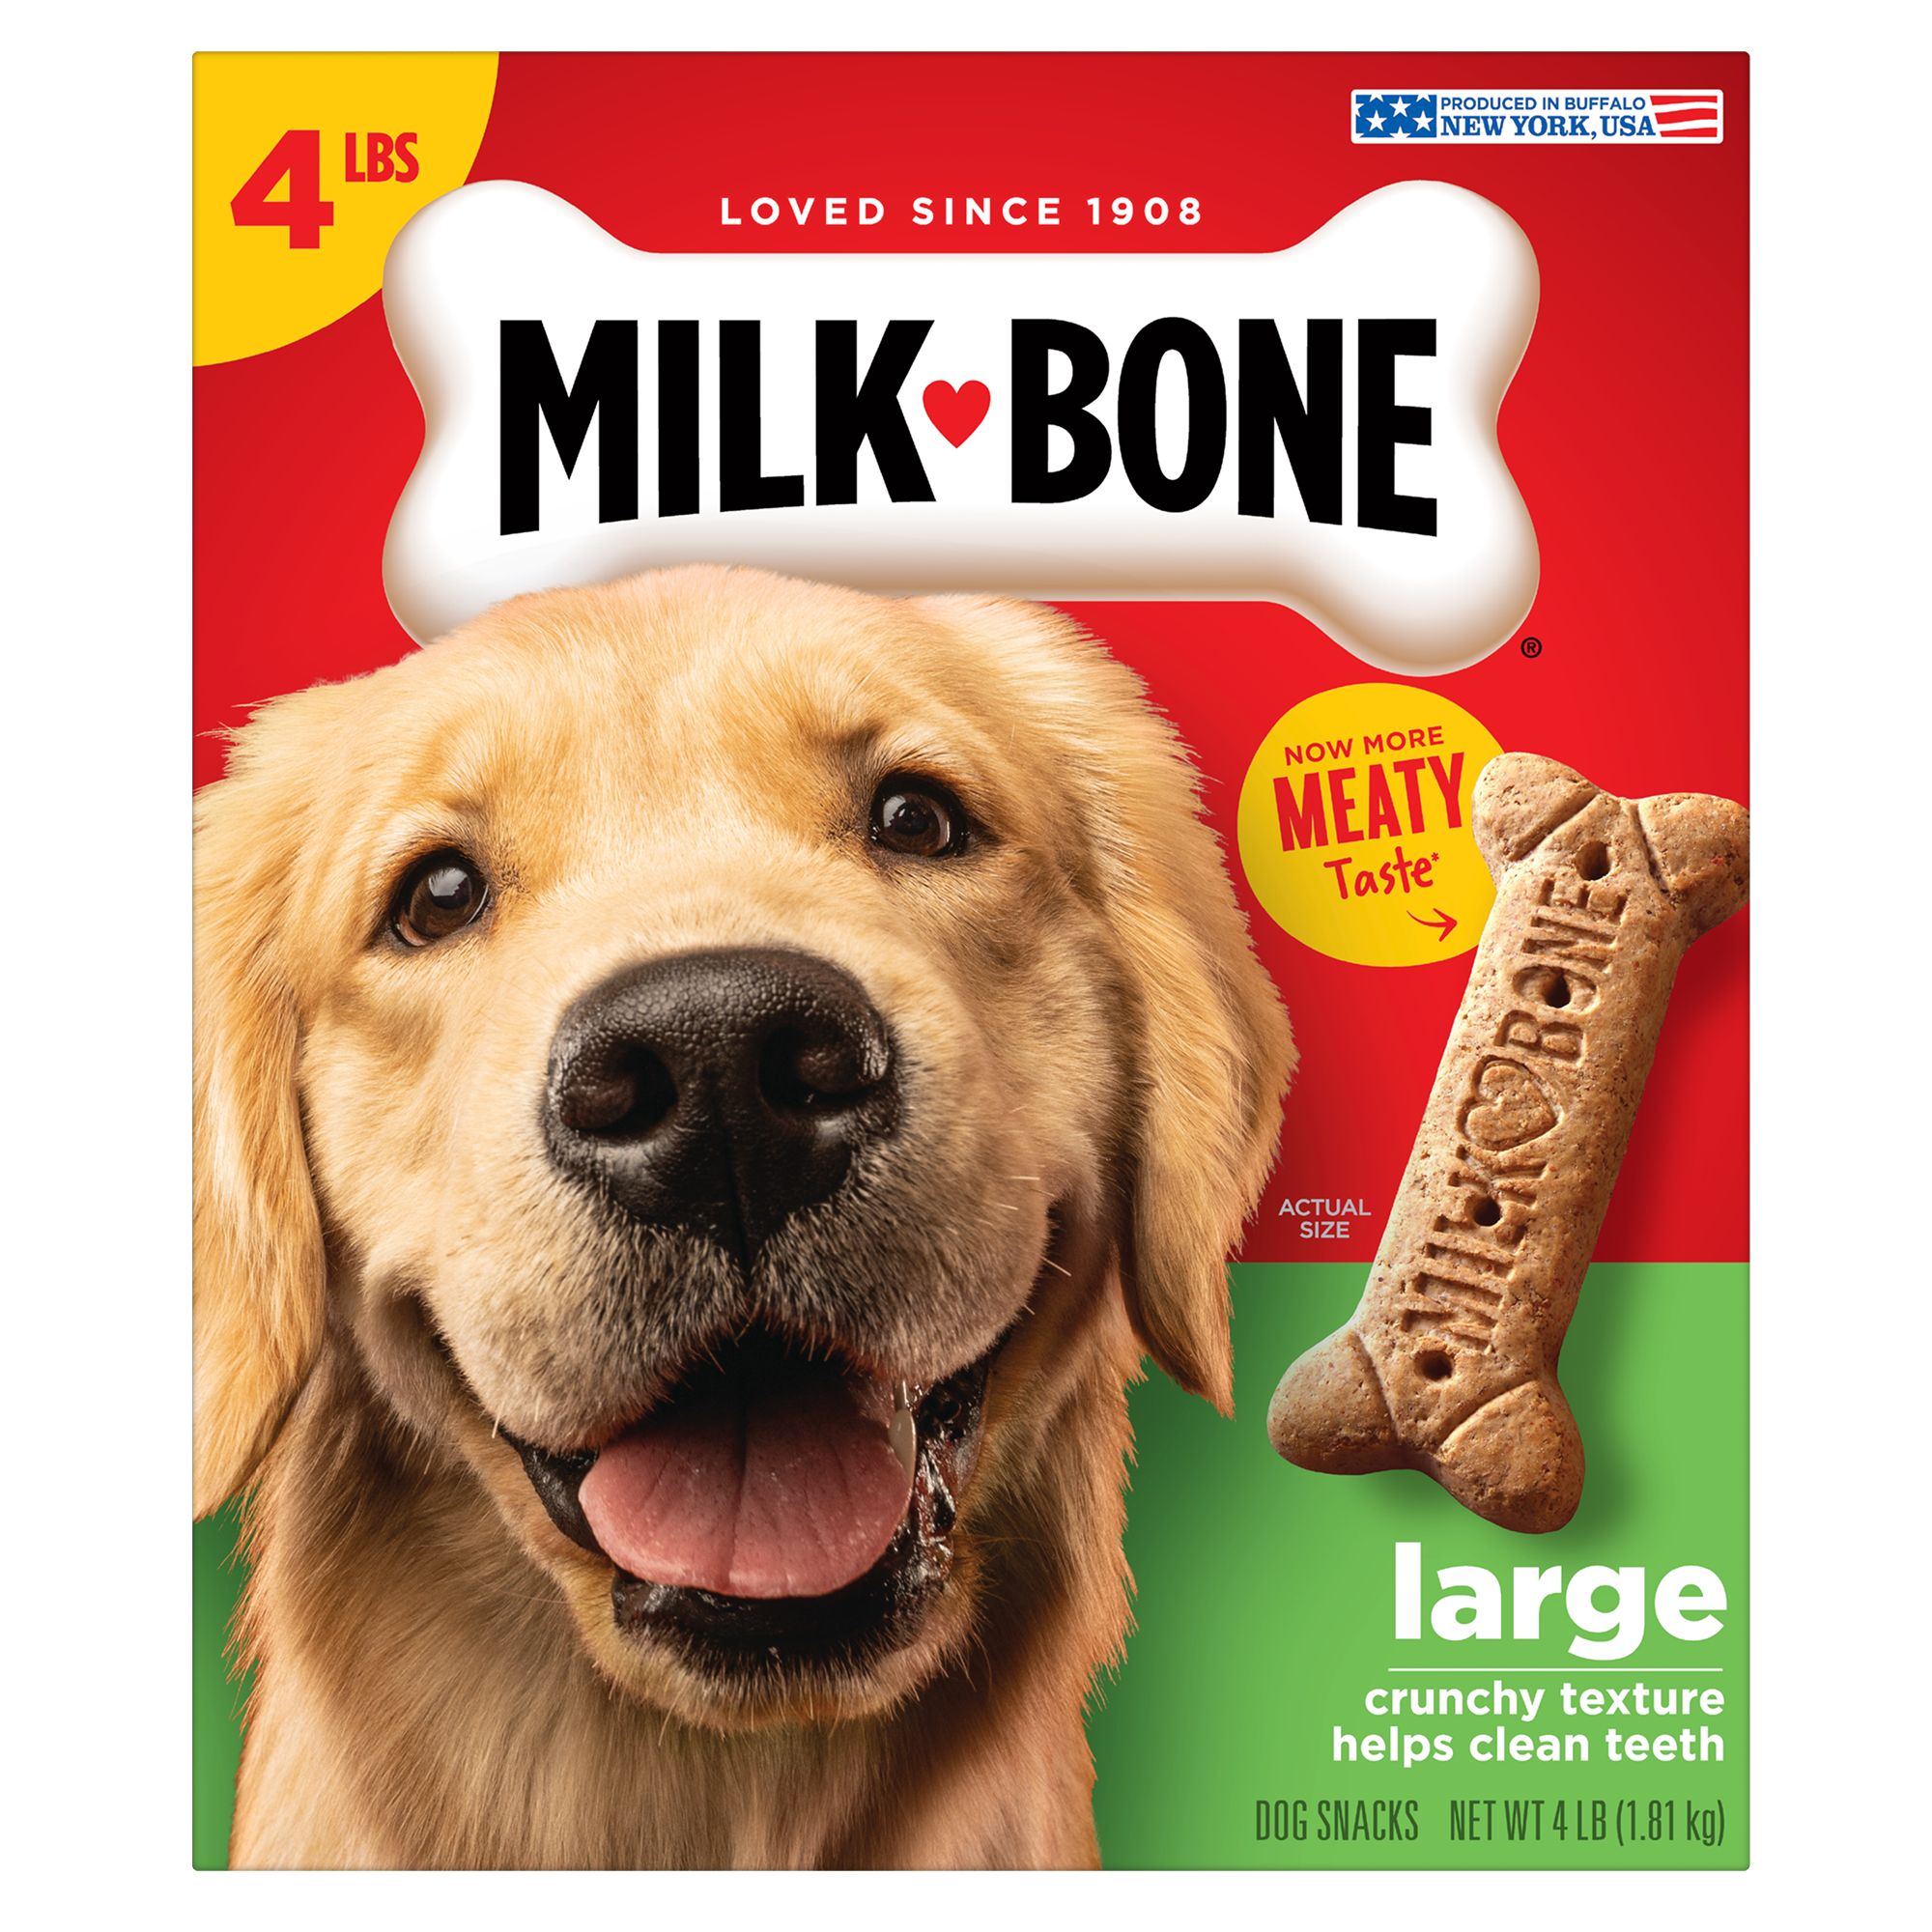 is my dog allergic to milk bones